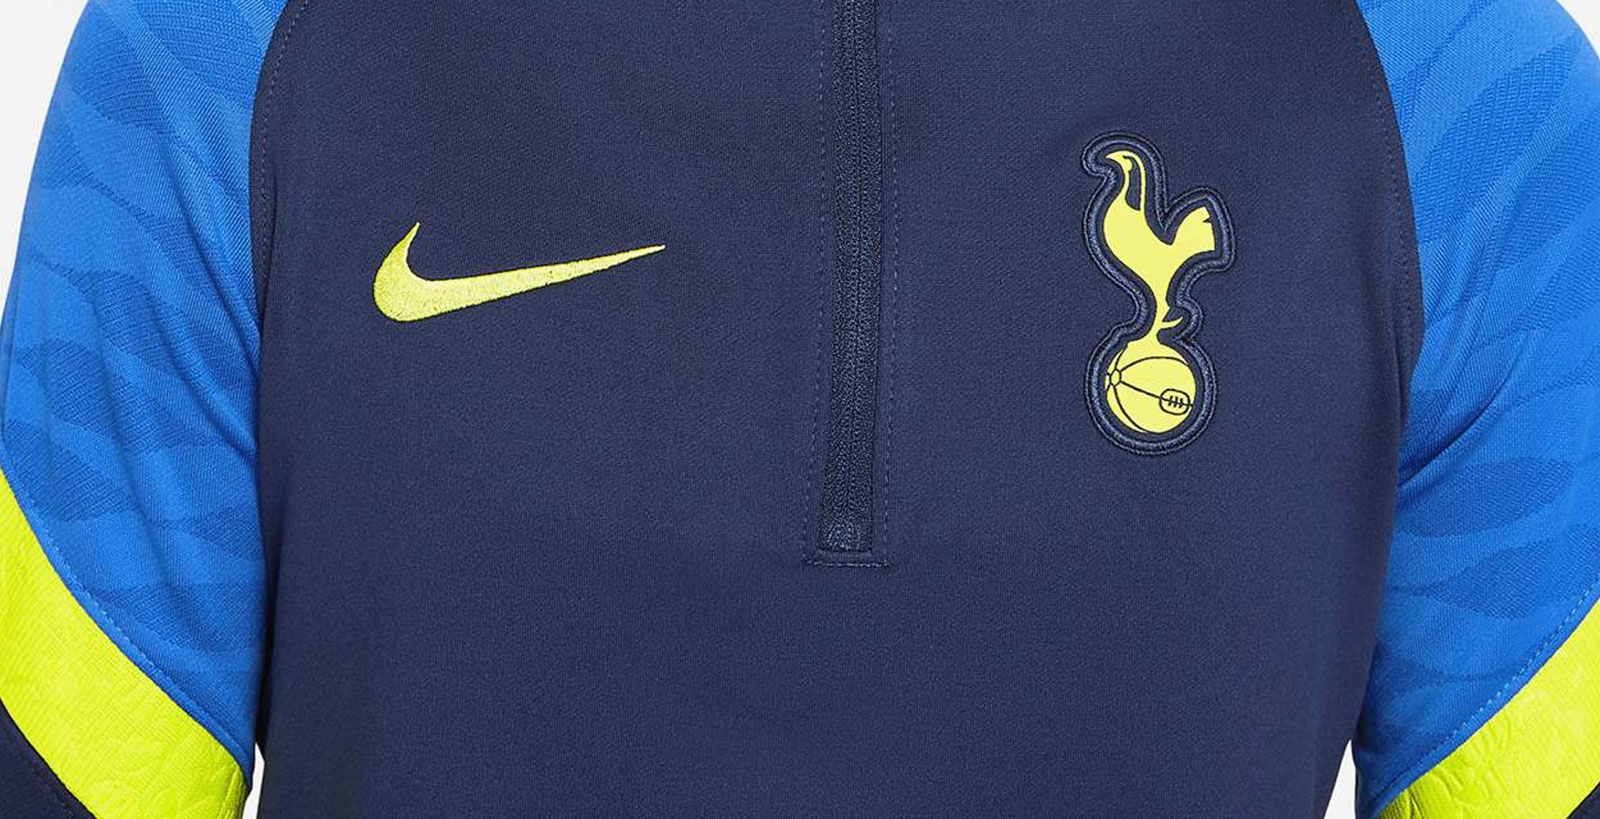 Indica Wederzijds aankomen Nike Tottenham 2021-2022 Training Kit Leaked - Footy Headlines